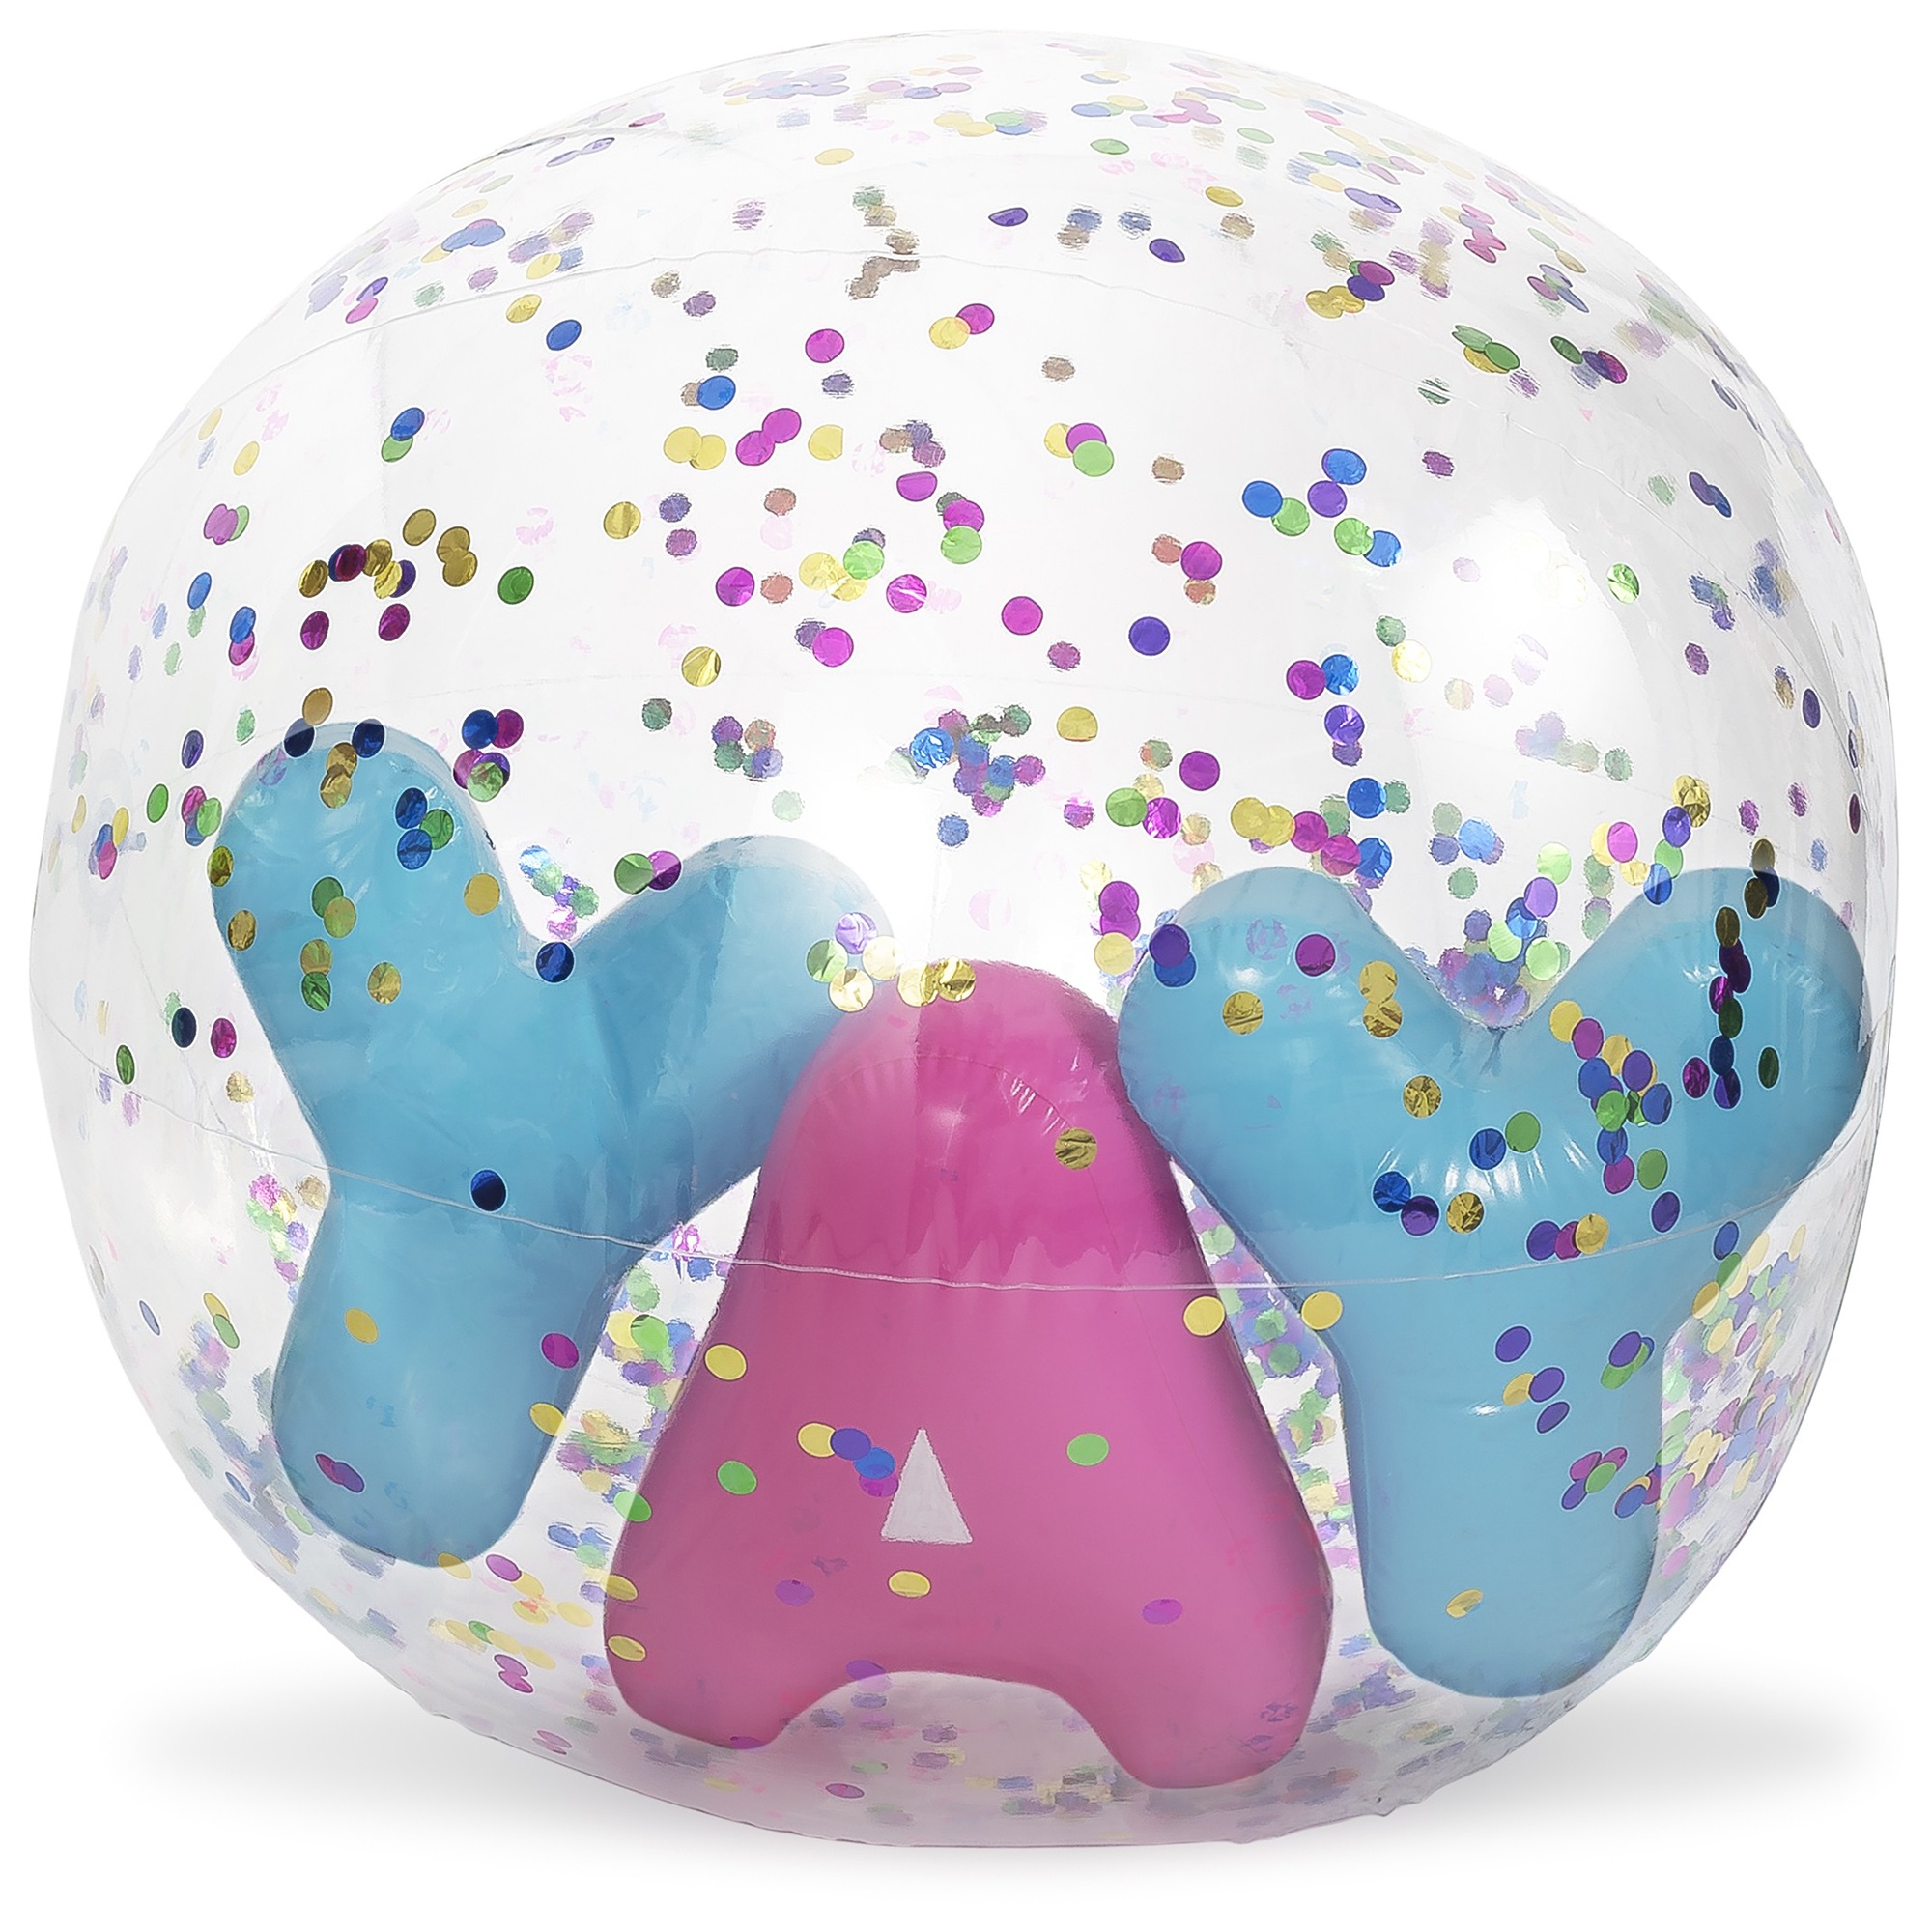 Inflatable Globes & Beach Balls : Confetti YAY Beach Ball